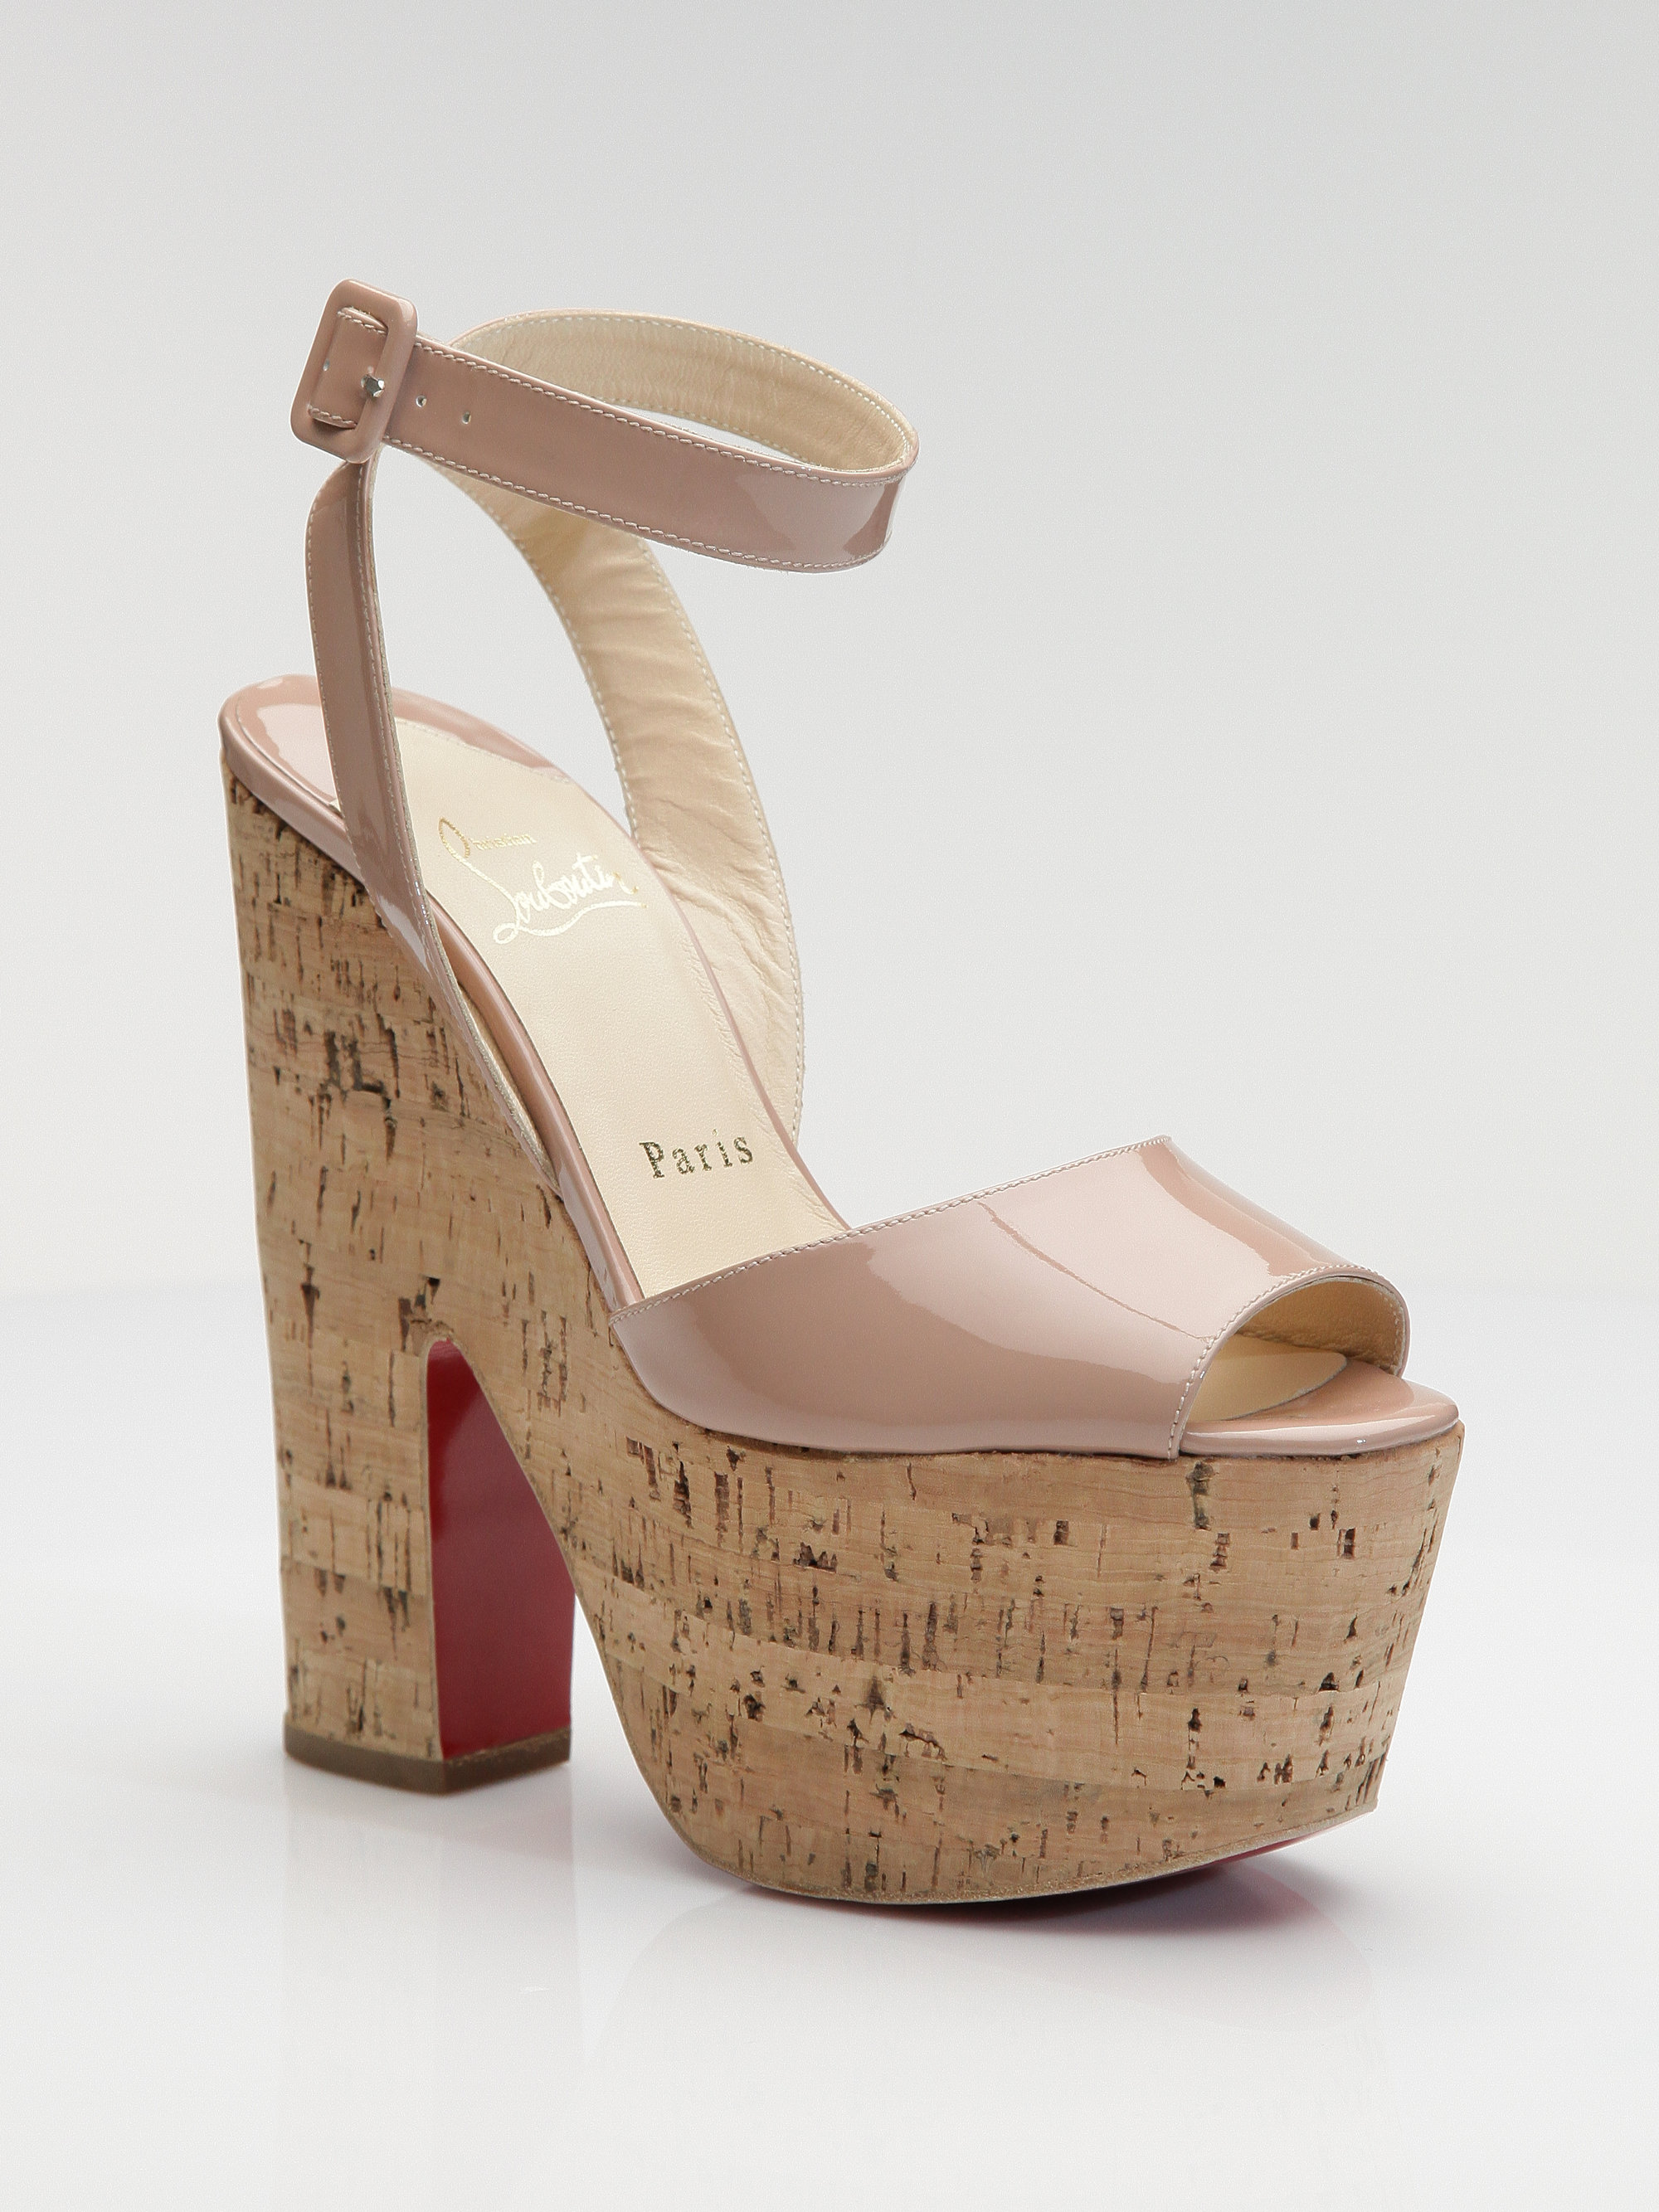 replica slippers - christian louboutin cork platform sandals | The Little Arts Academy